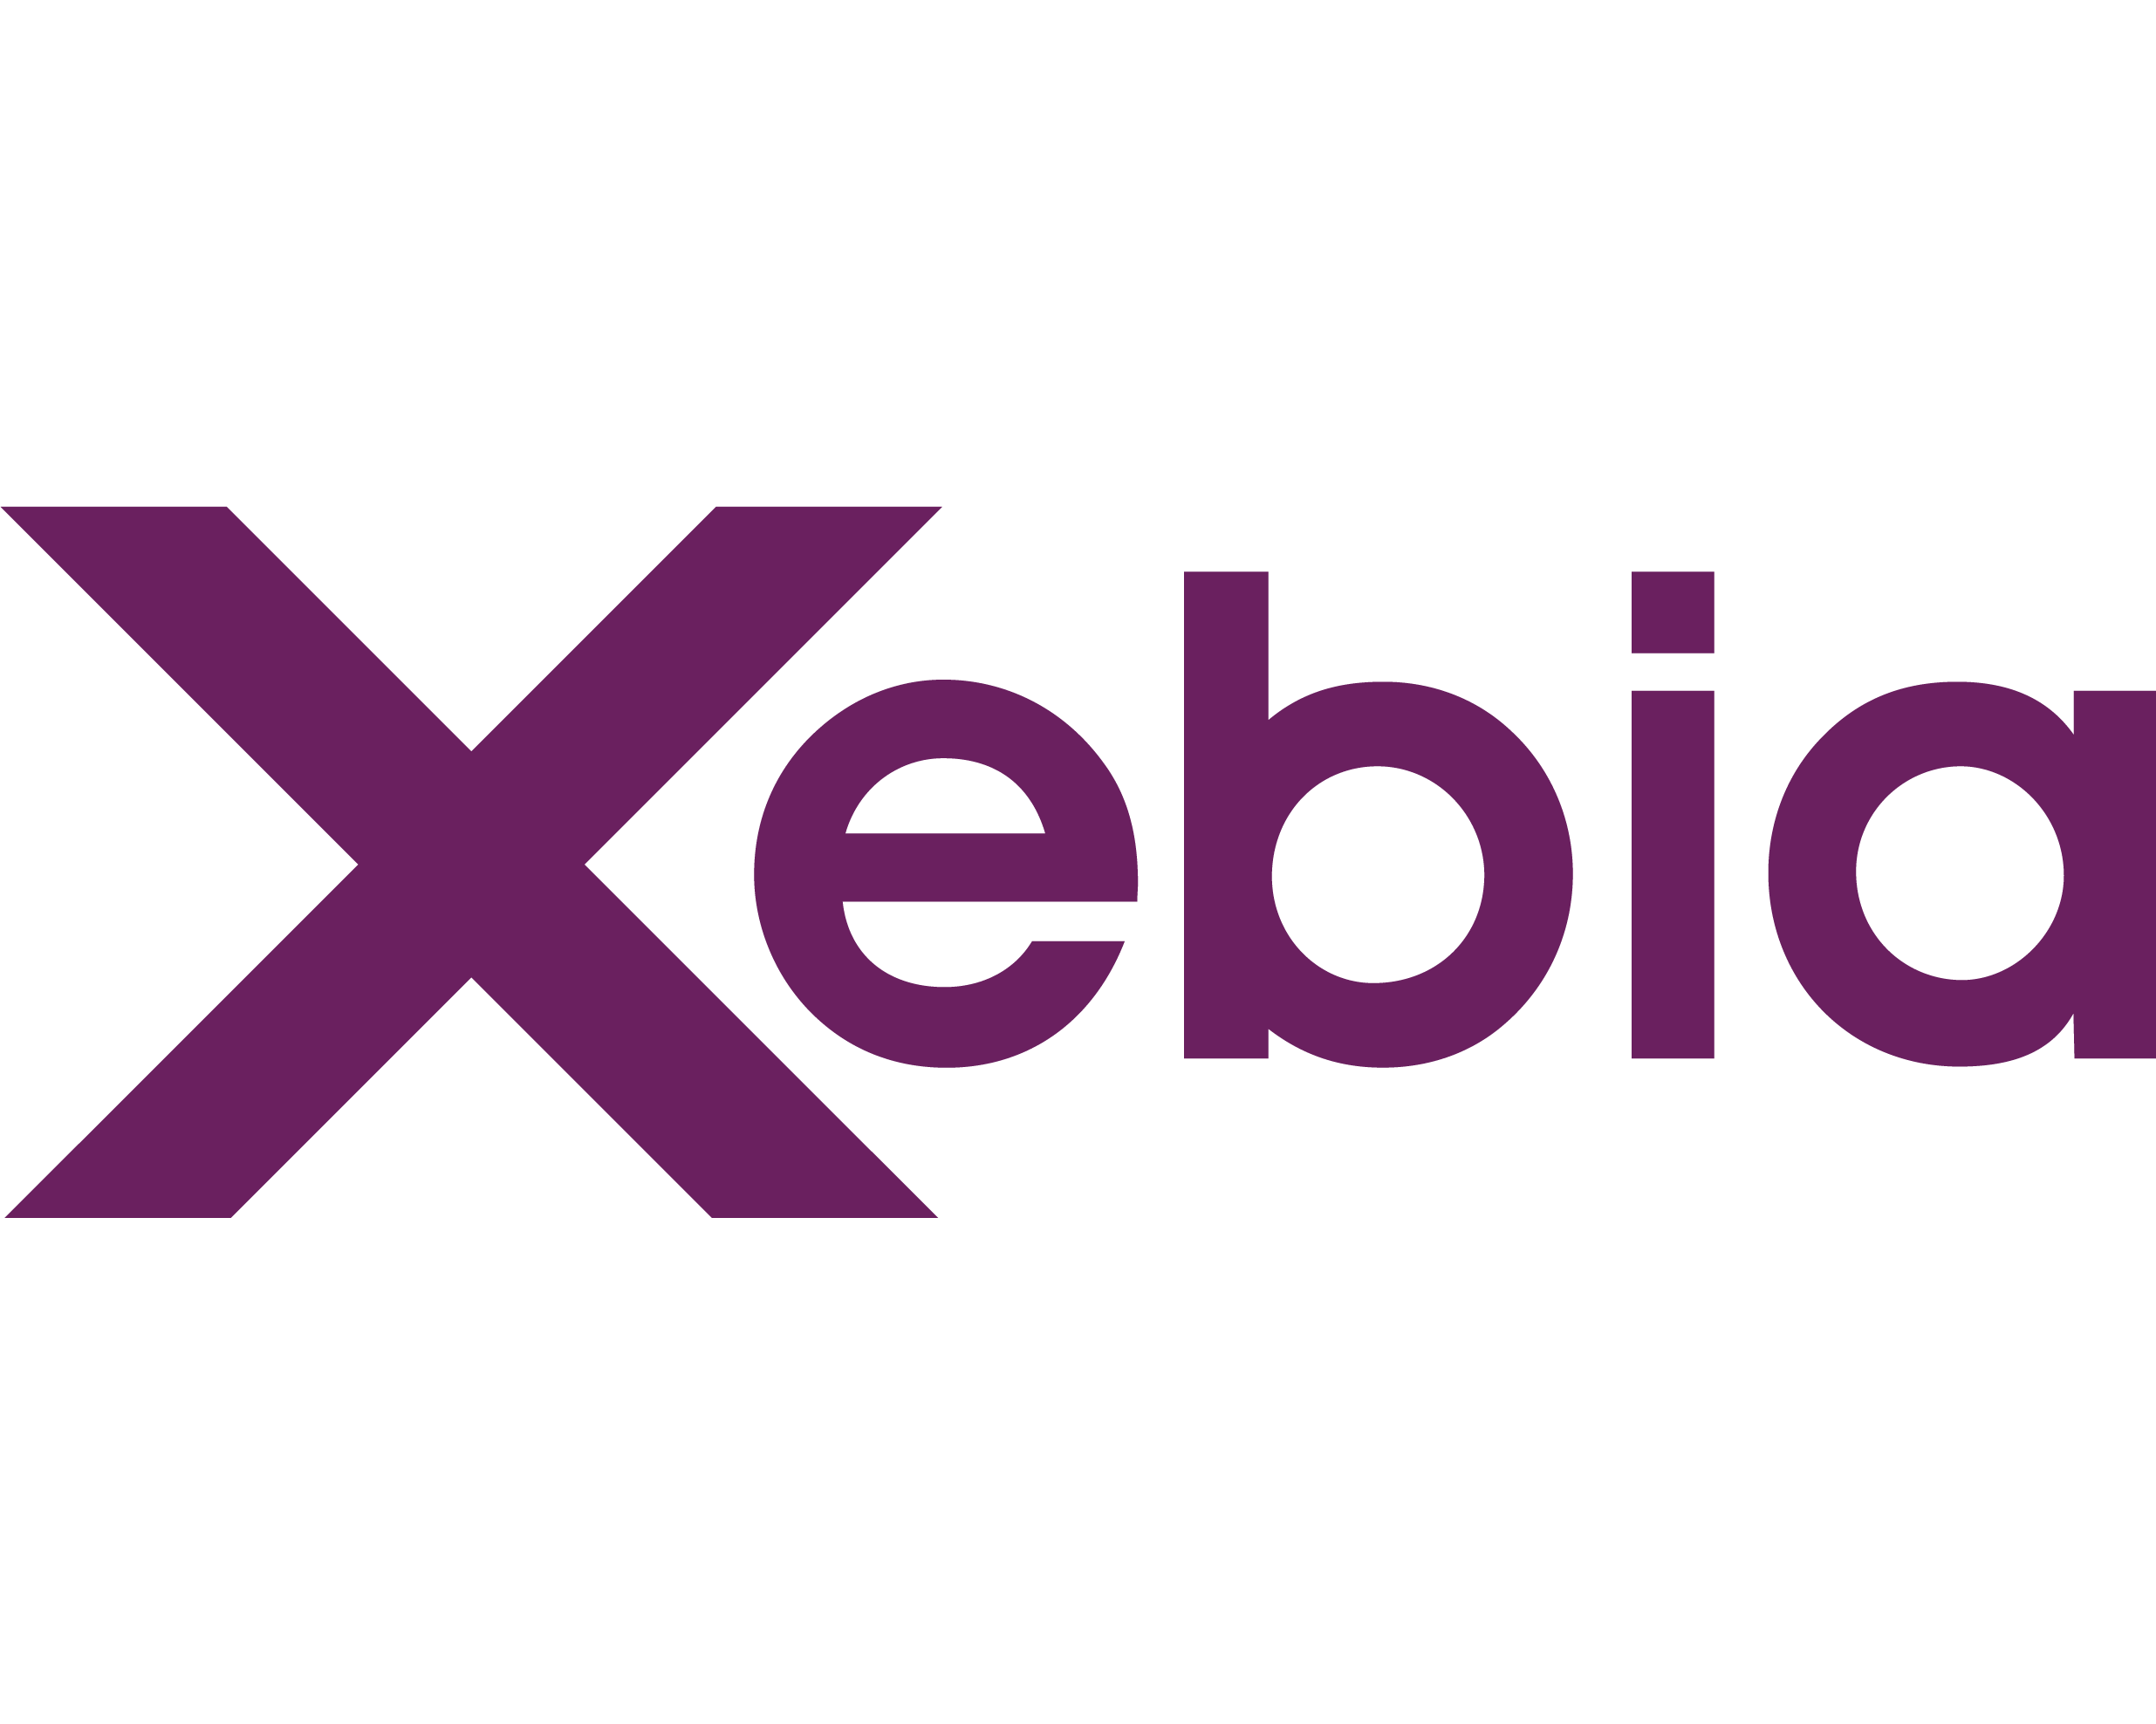 xebia_logo-large-transparent.png